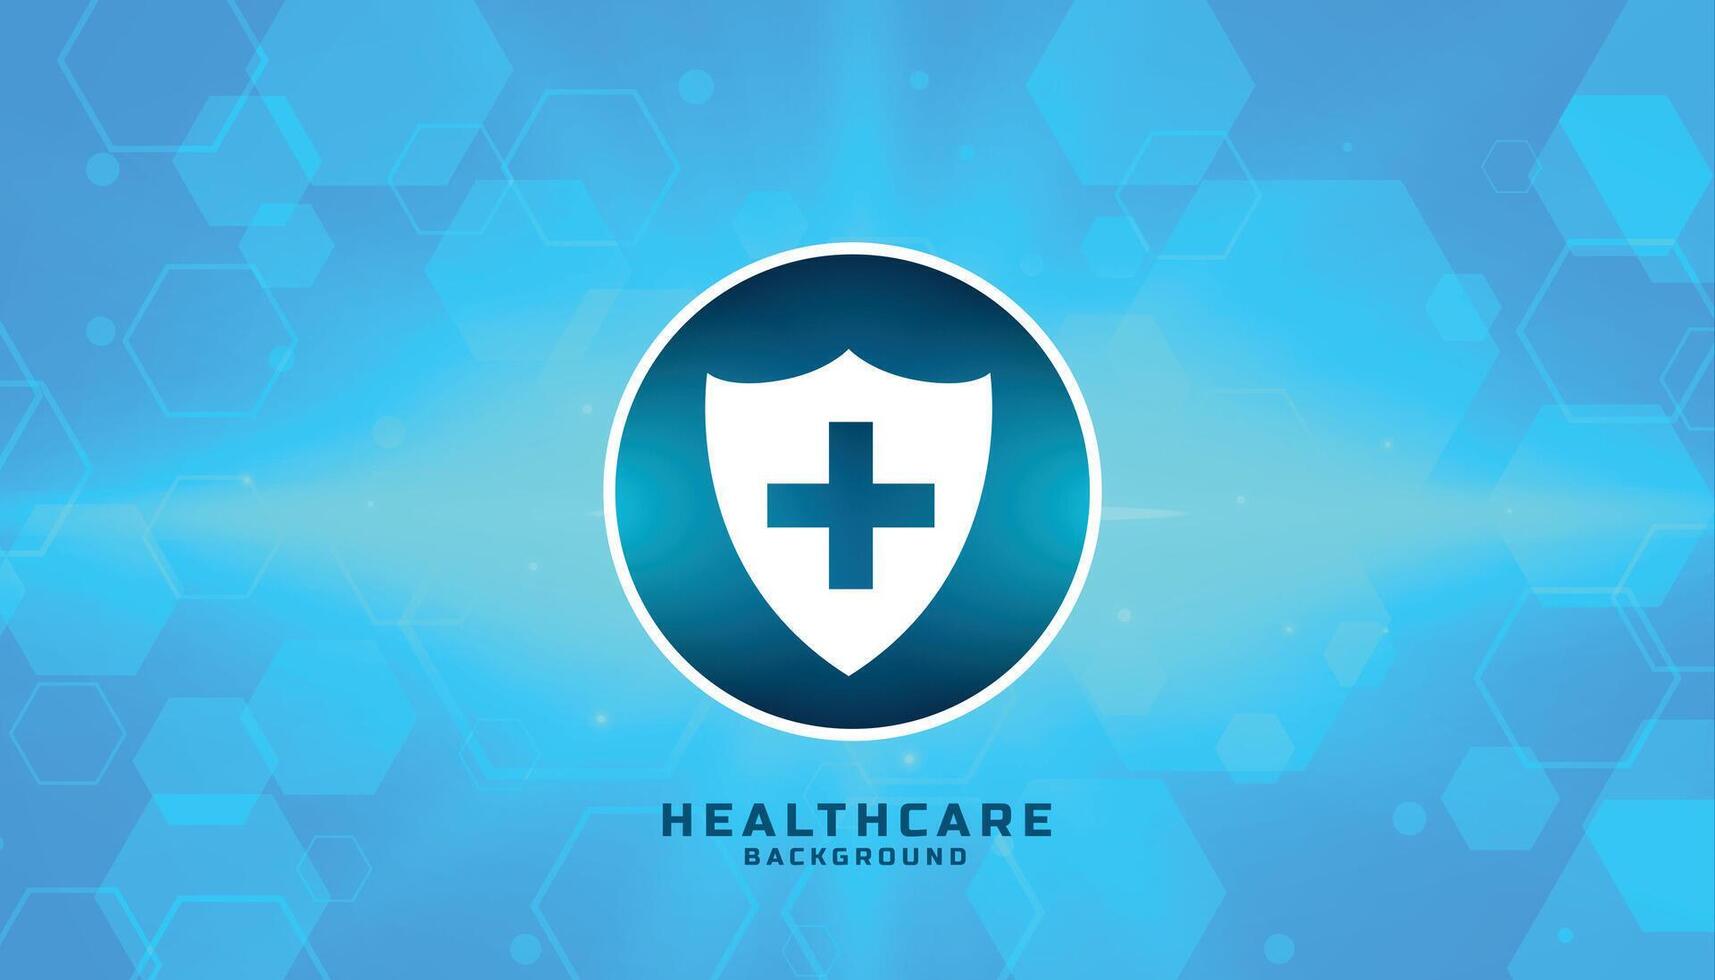 médical sécurité badge avec bleu hexagonal Contexte vecteur